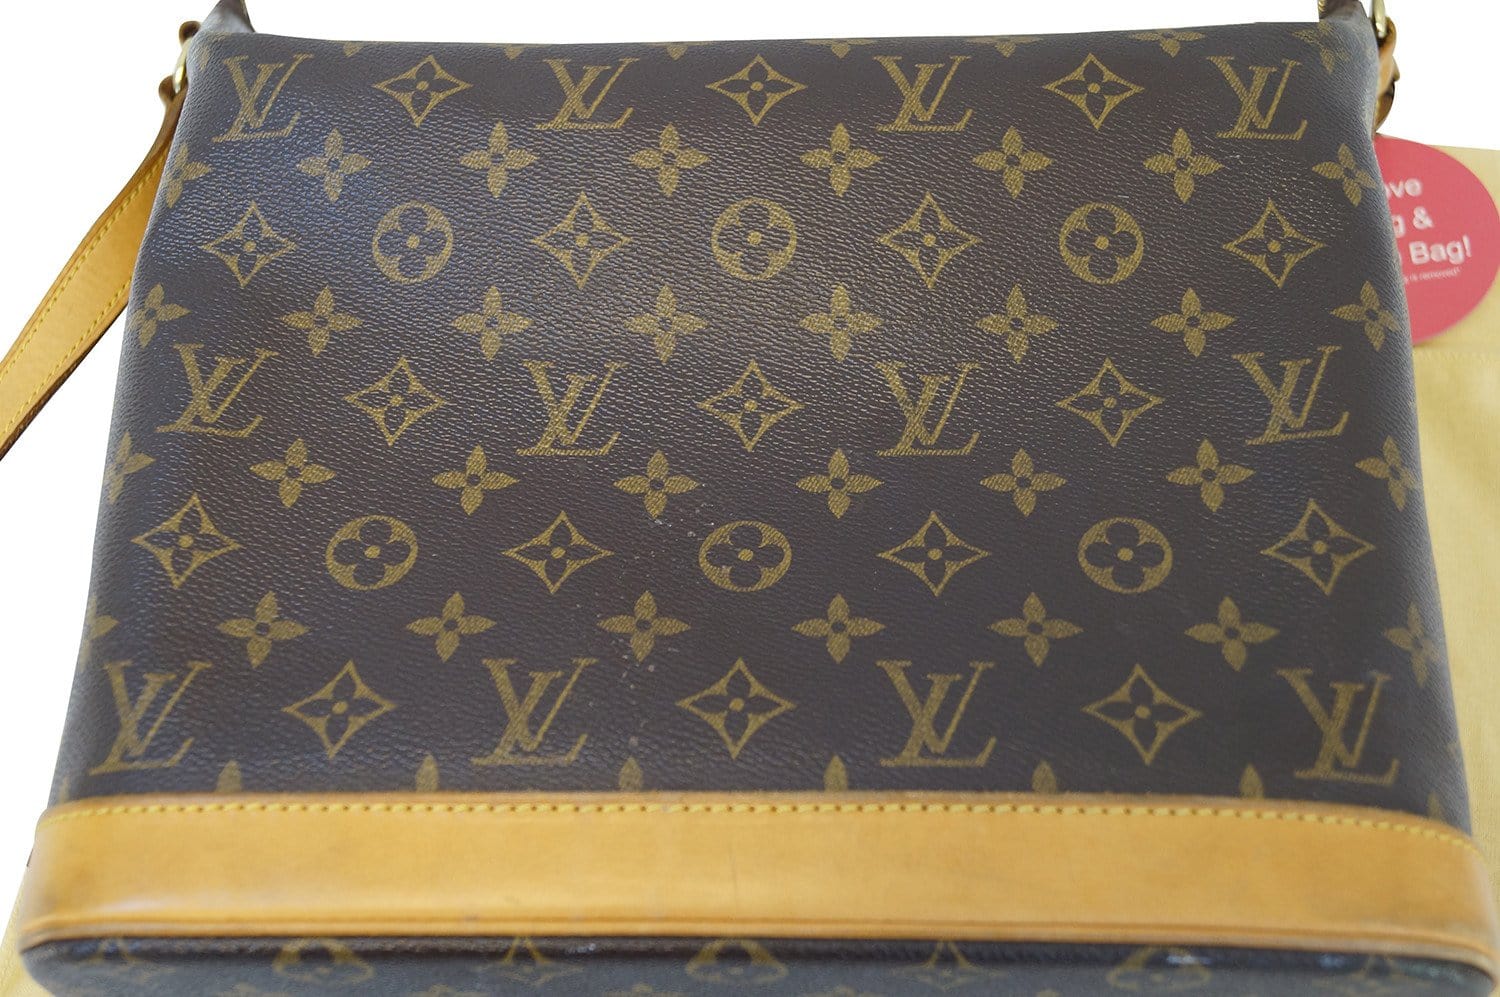 Louis Vuitton Monogram Amfar Three Sharon Stone Shoulder Bag Louis Vuitton